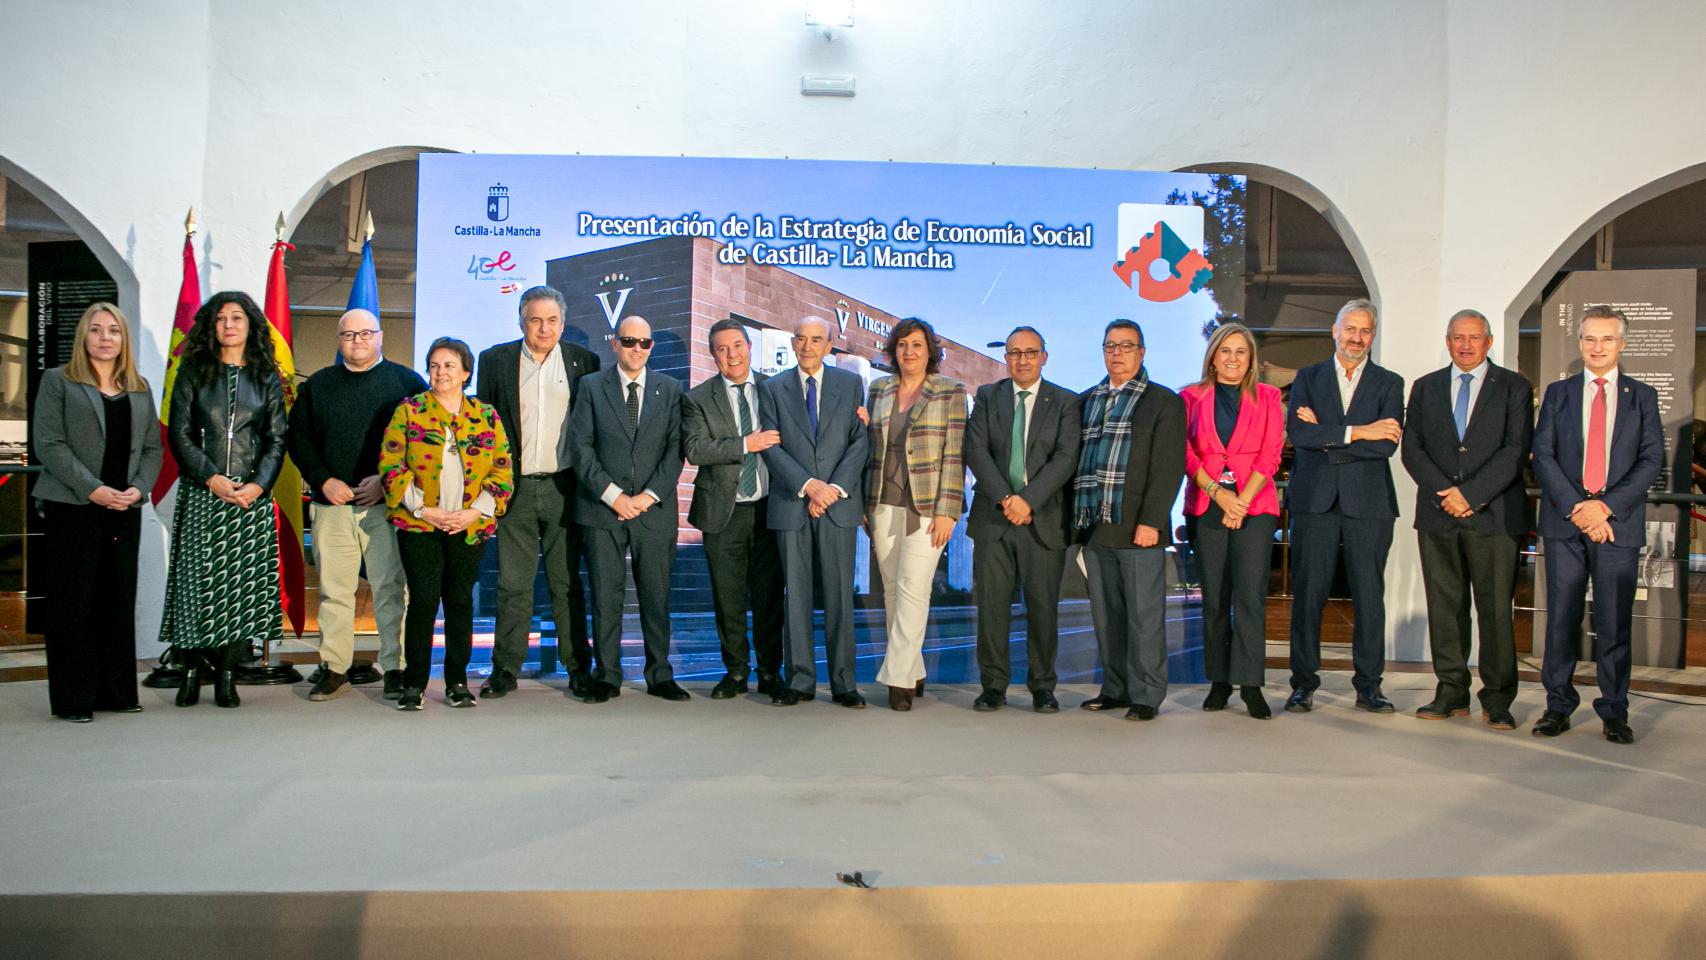 Castilla-La Mancha launches its first socioeconomic strategy